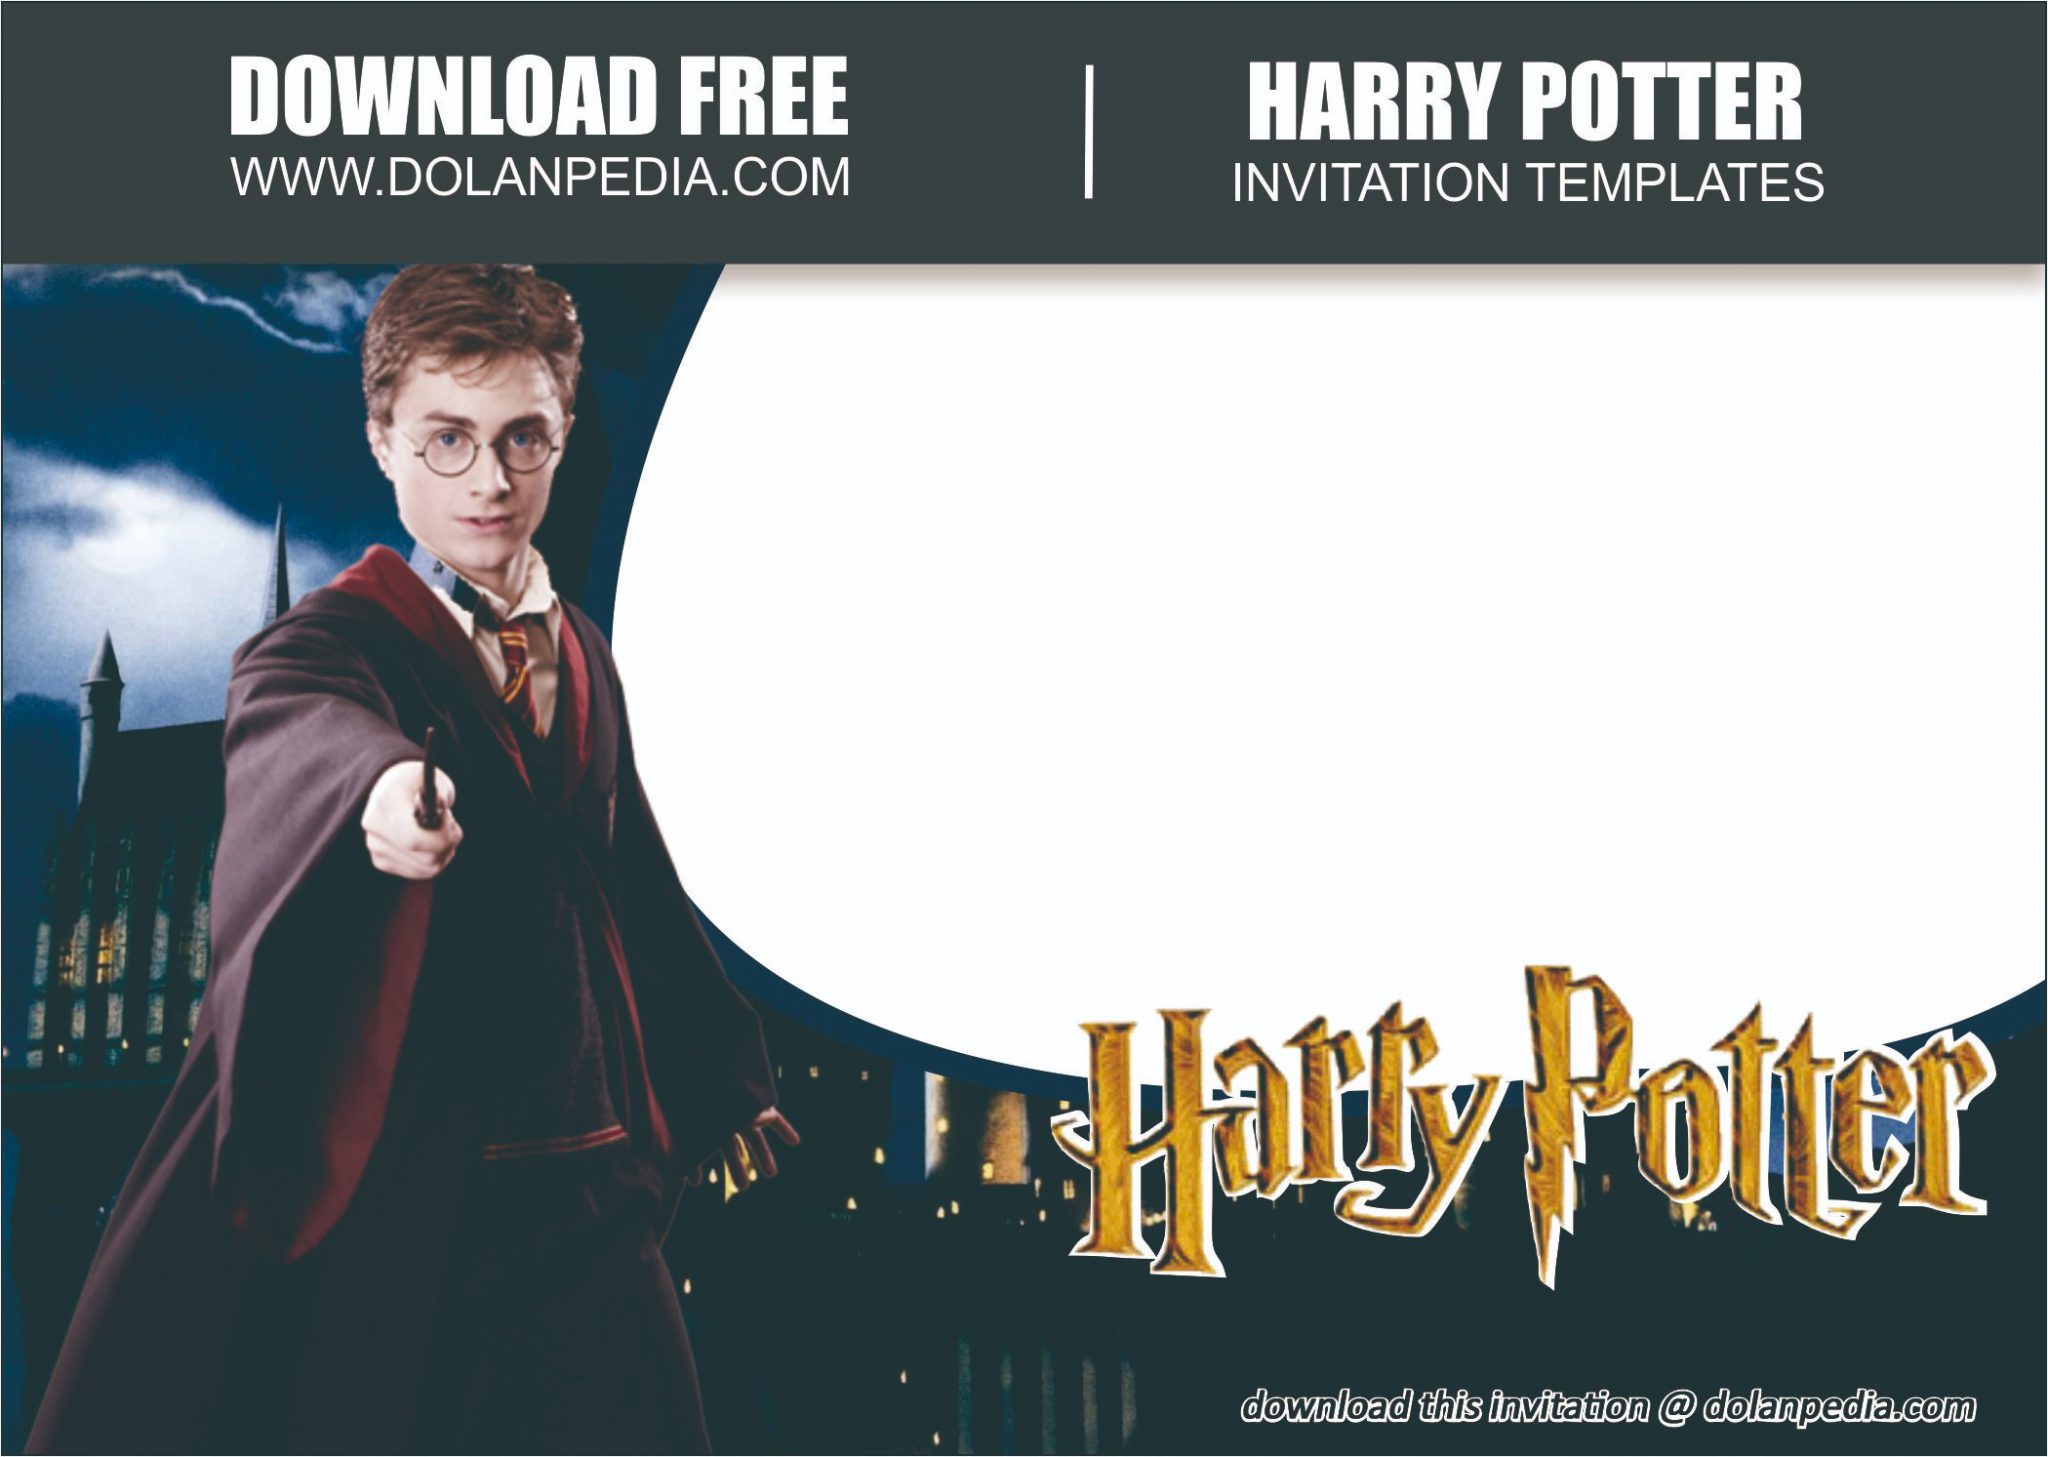 free-printable-harry-potter-invitation-templates-dolanpedia